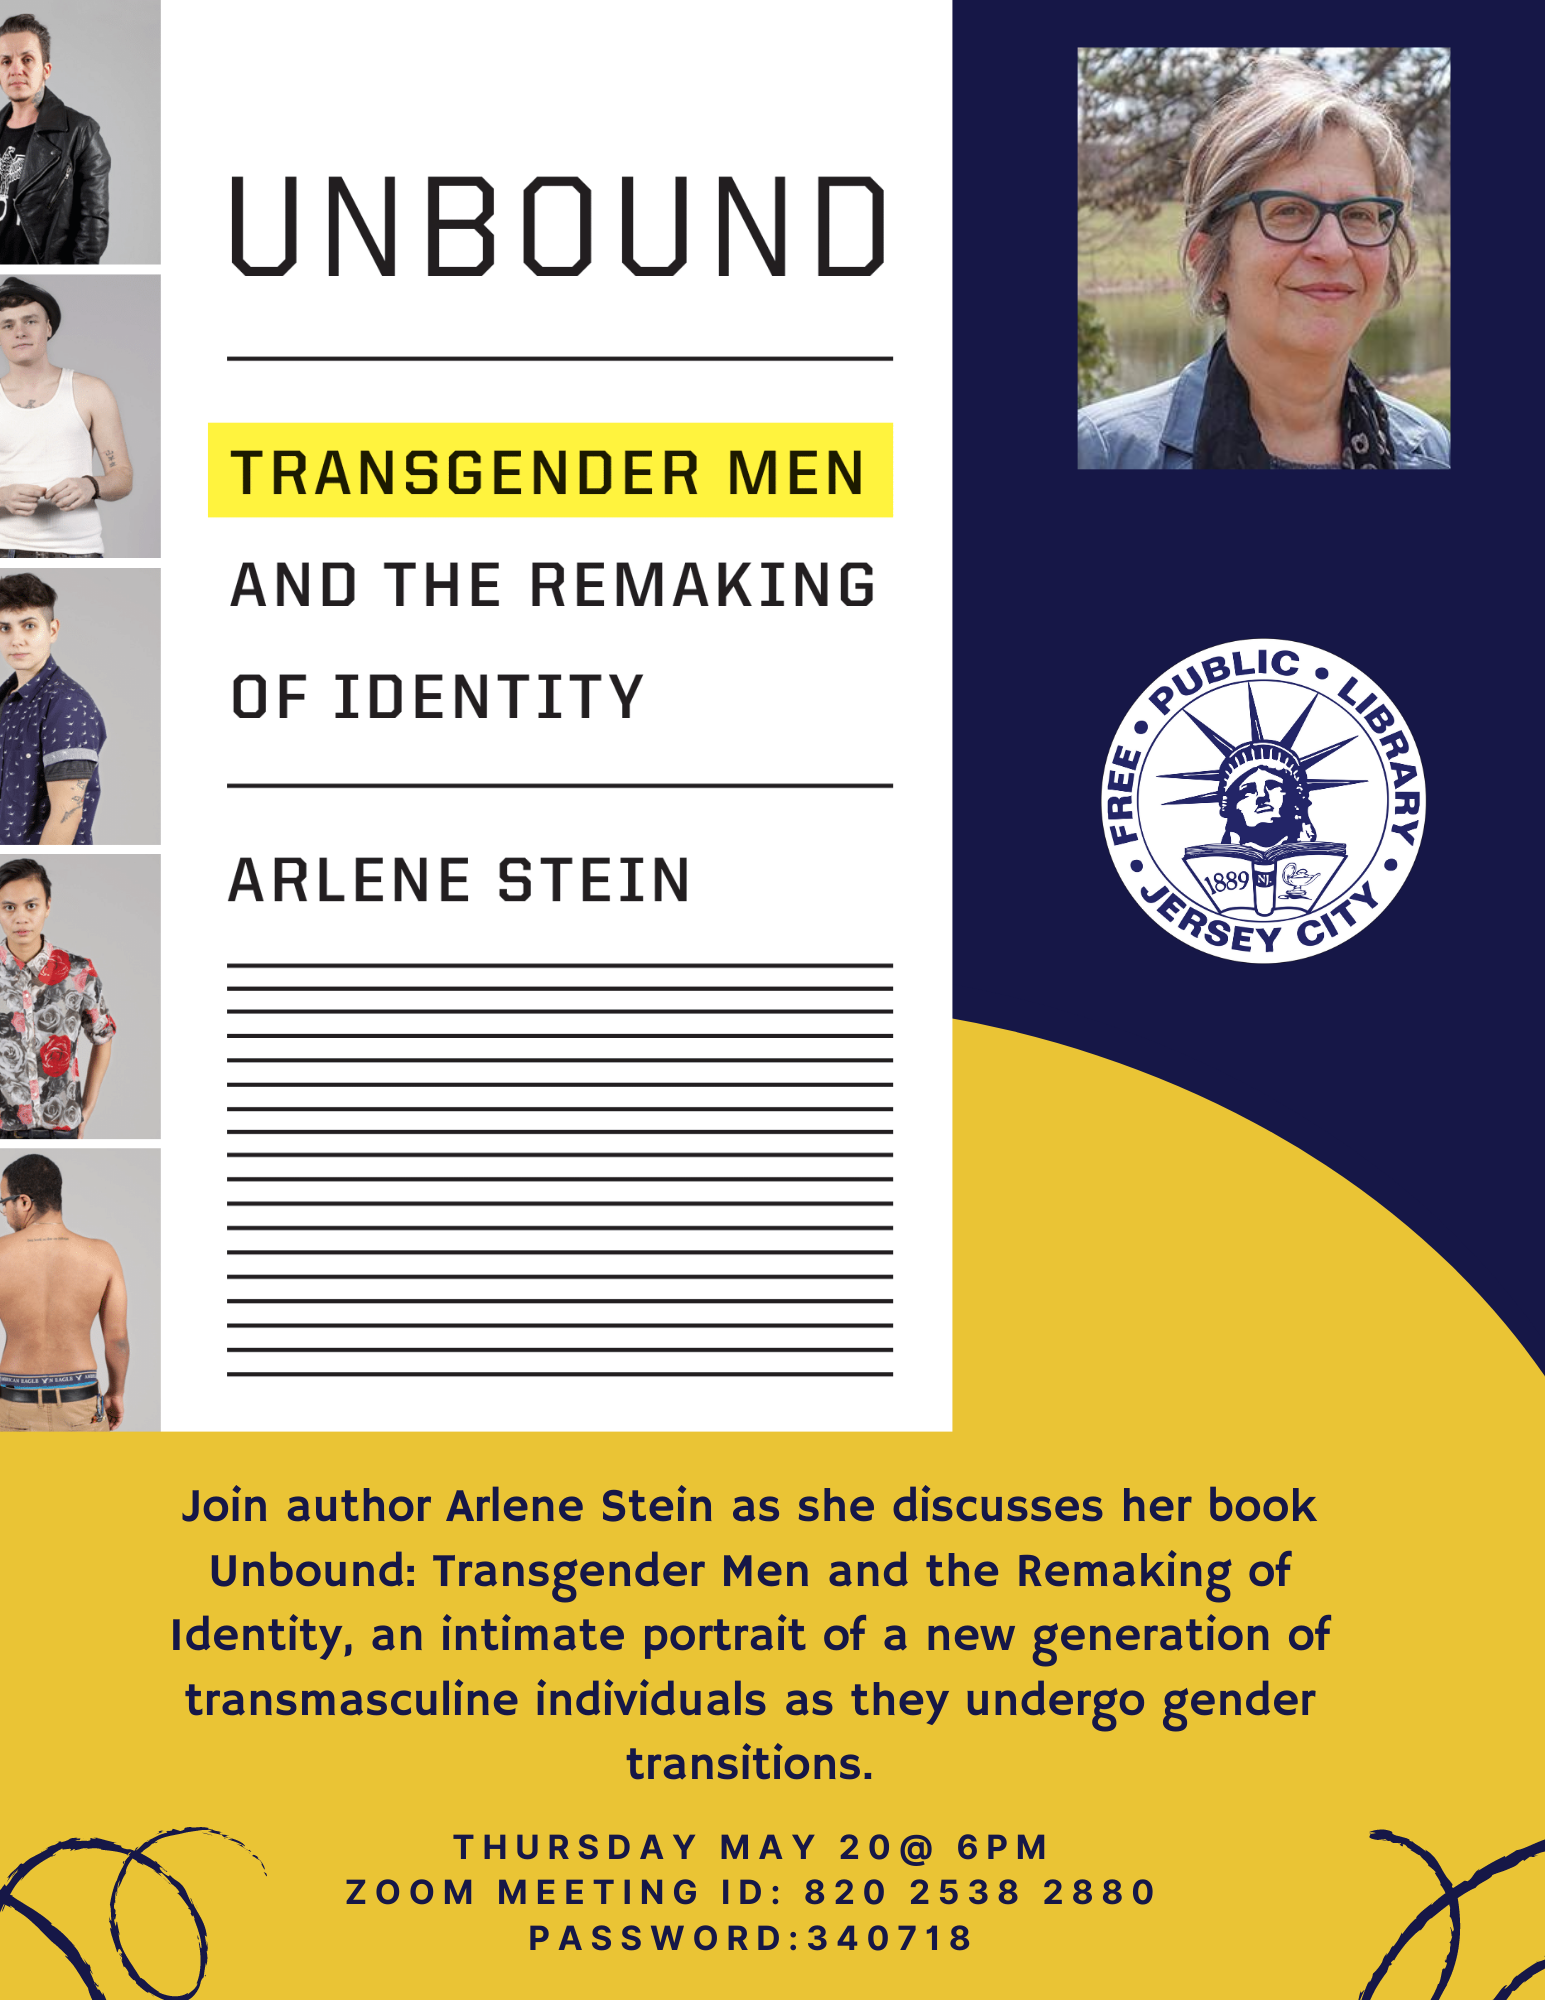 Unbound transgender men and the remaking of identity flyer